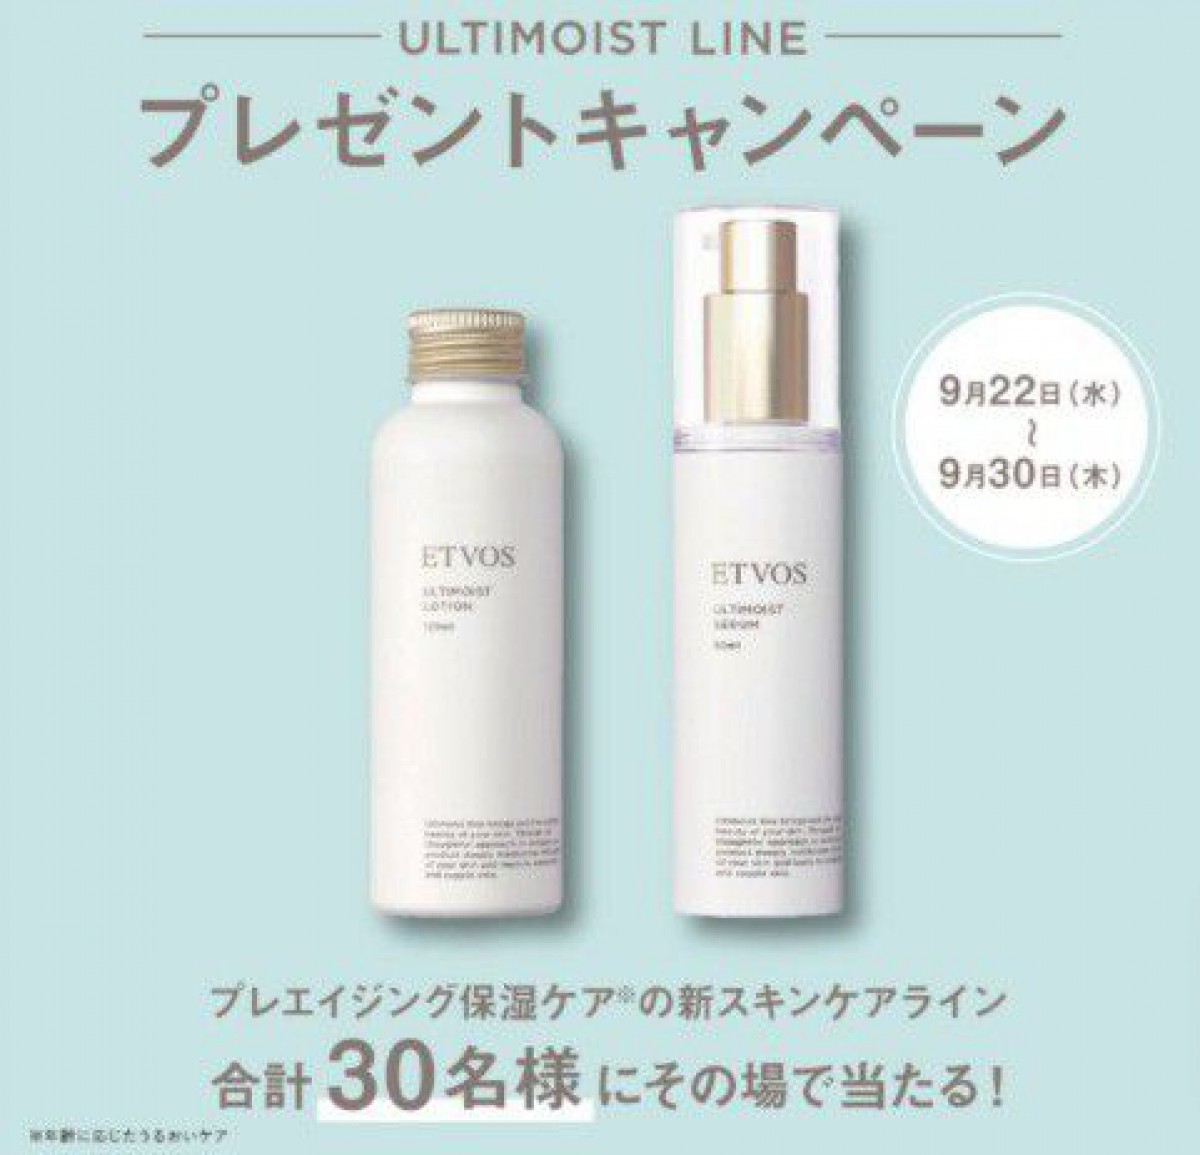 ETVOSの化粧水＆美容液セットがその場で当たるTwitterキャンペーン☆